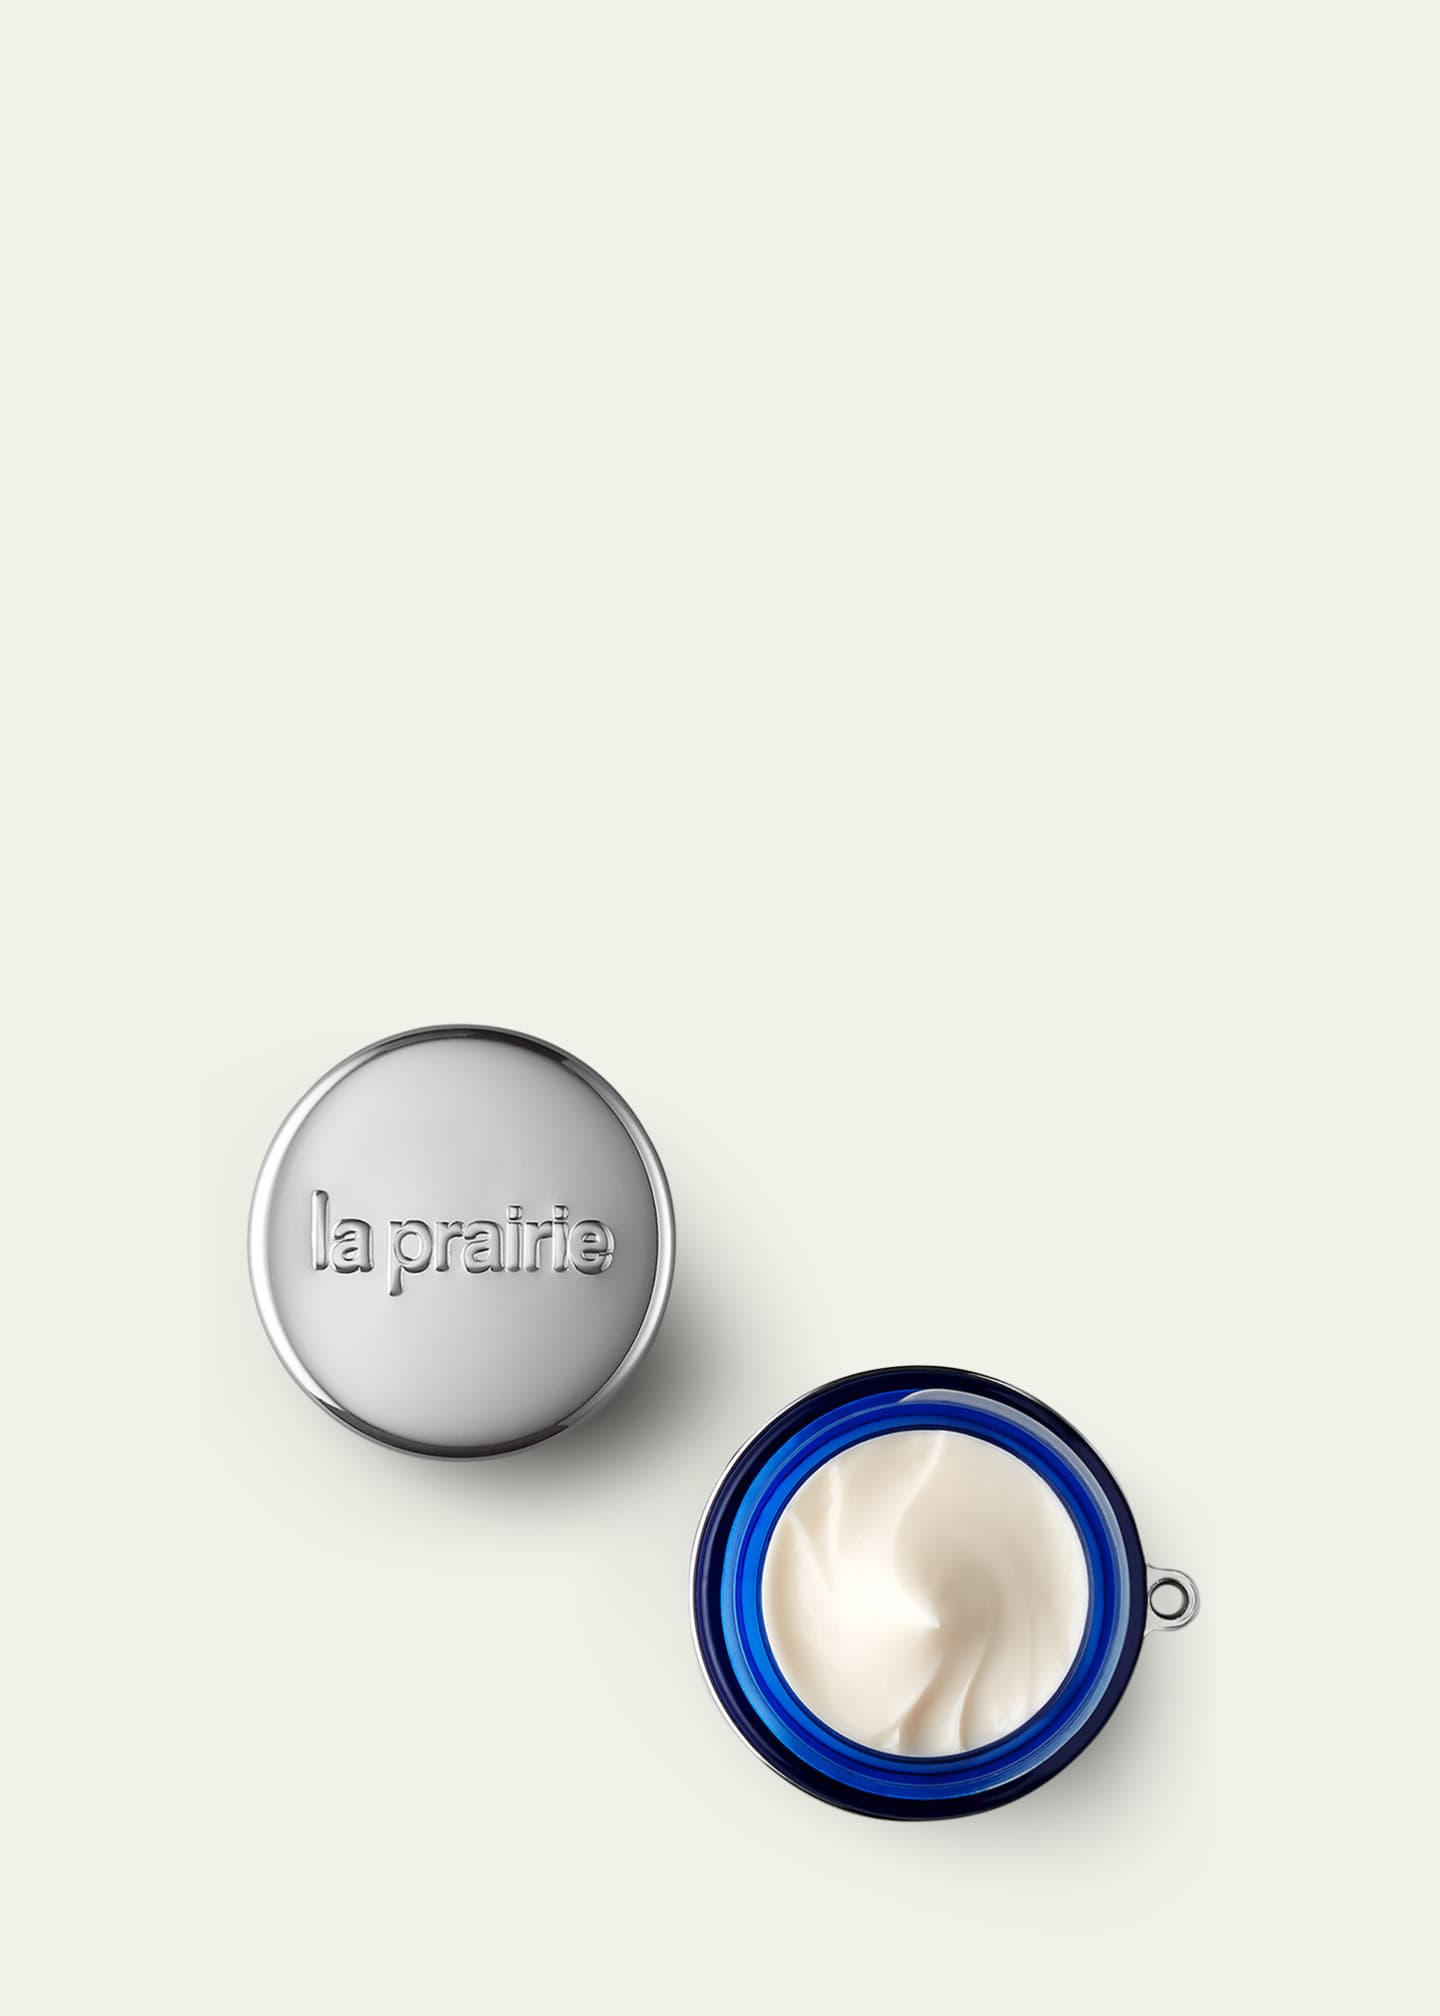 La Prairie Skin Caviar Luxe Eye Cream Lifting and Firming Eye Cream Image 3 of 5